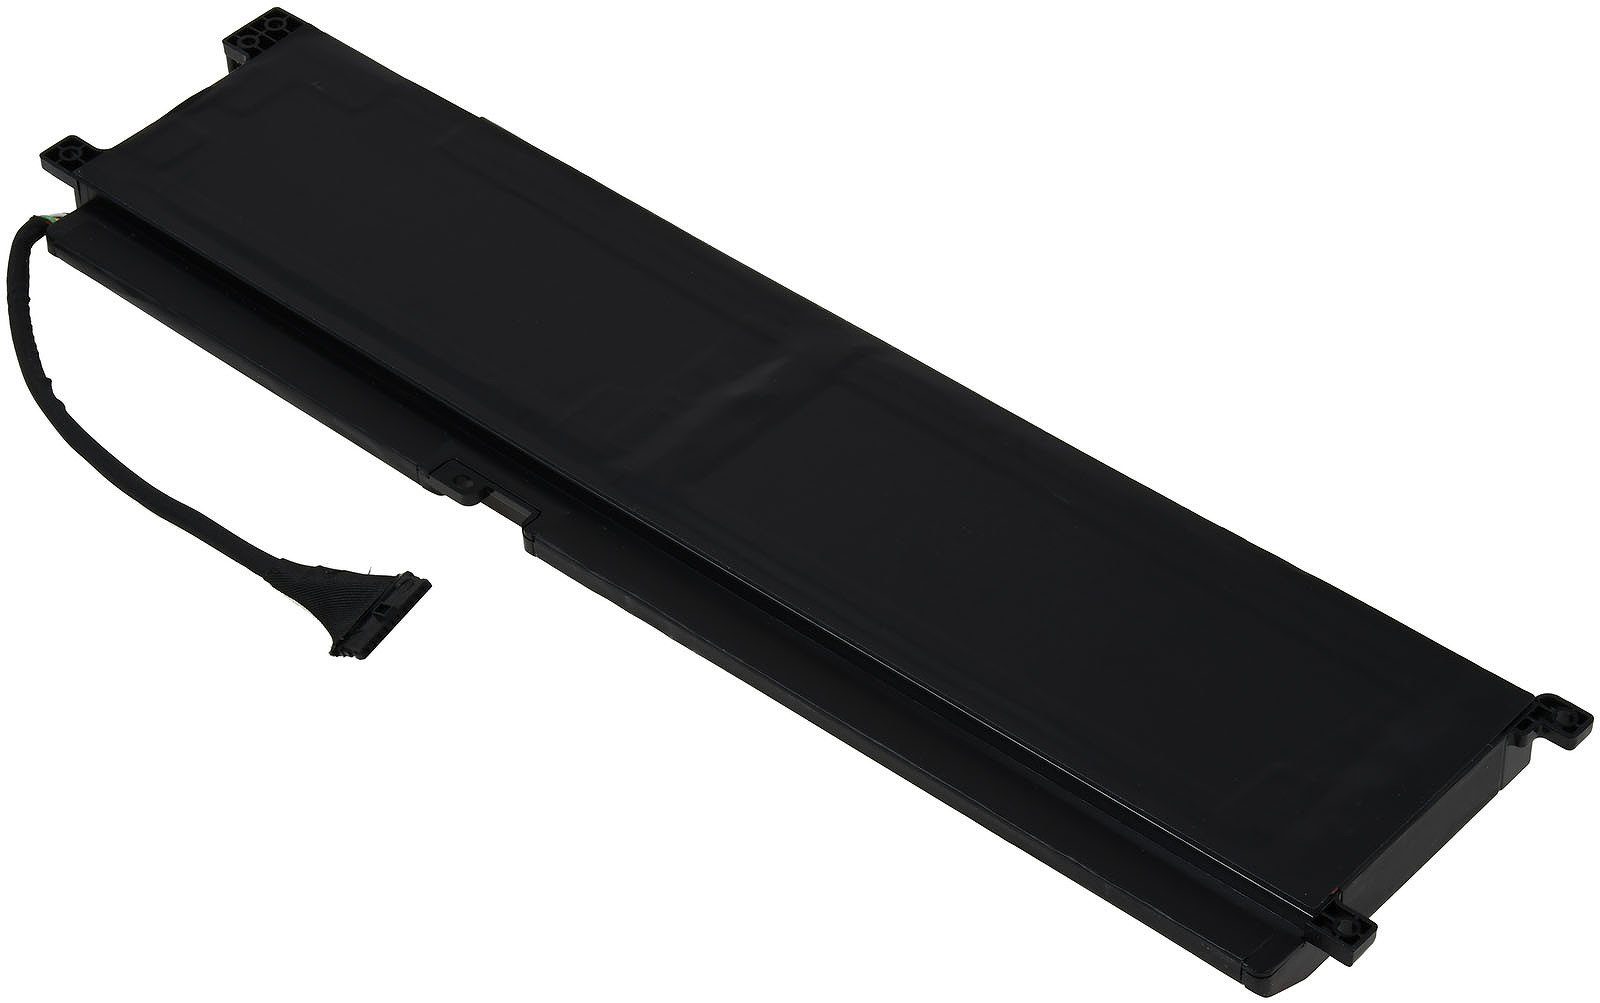 Blade Laptop-Akku 15 (15.4 V) mAh Akku für Razer 2020 Powery 4200